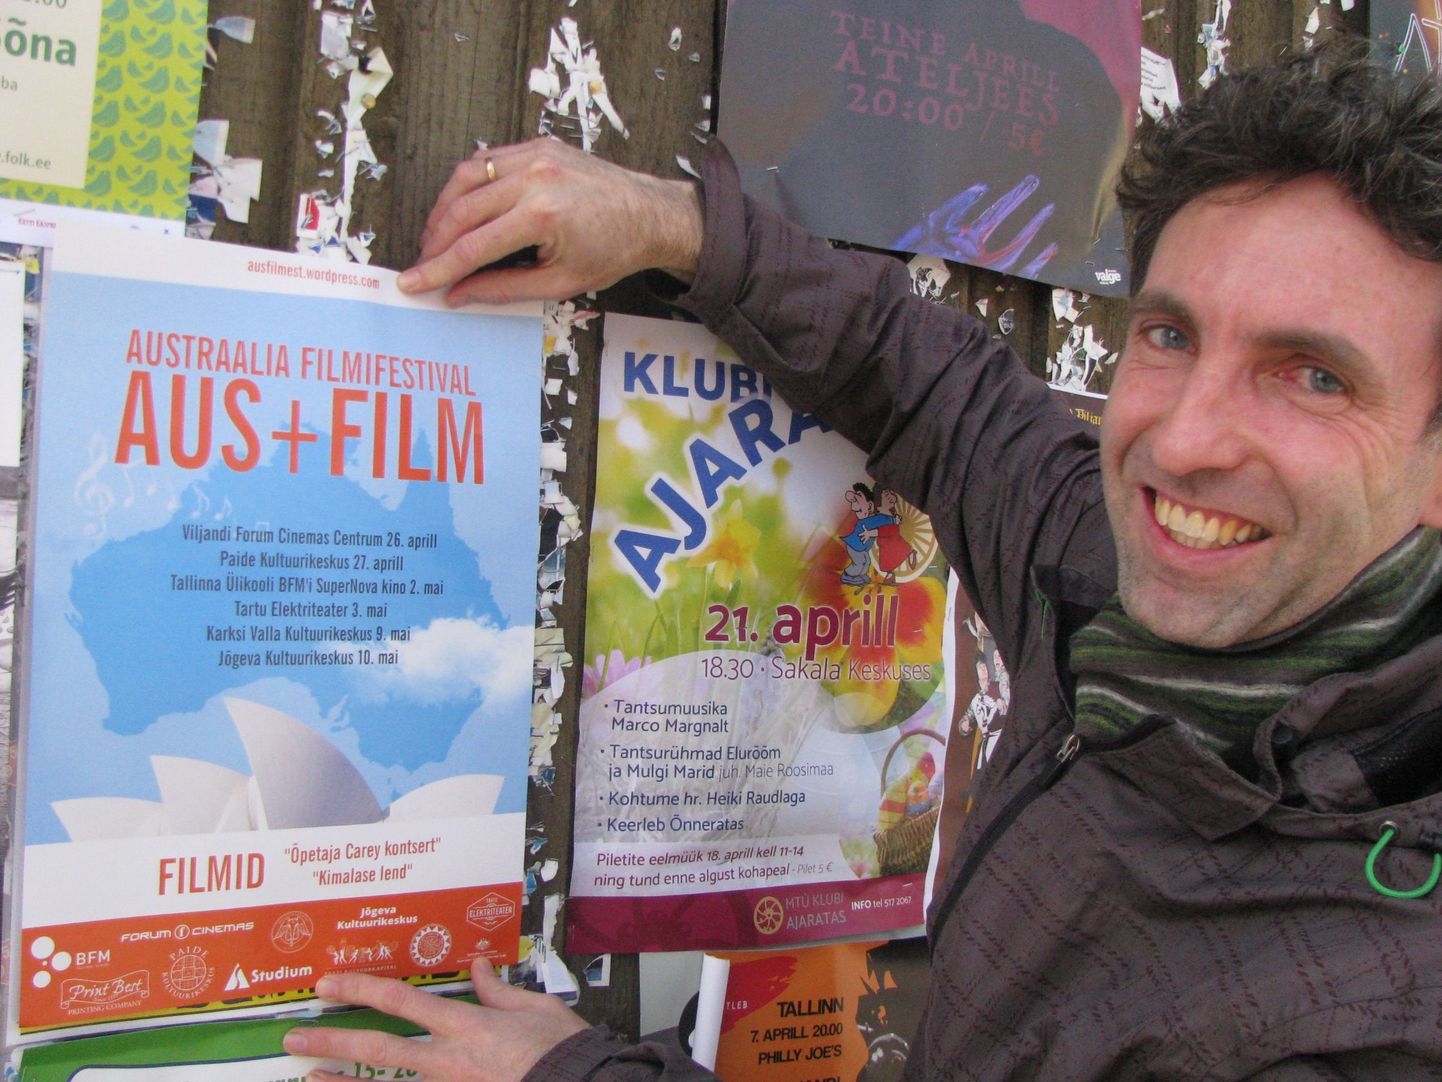 "AUS+FILM" festivali kutsus ellu Viljandis elav austraallane Geoffrey Longhurst.